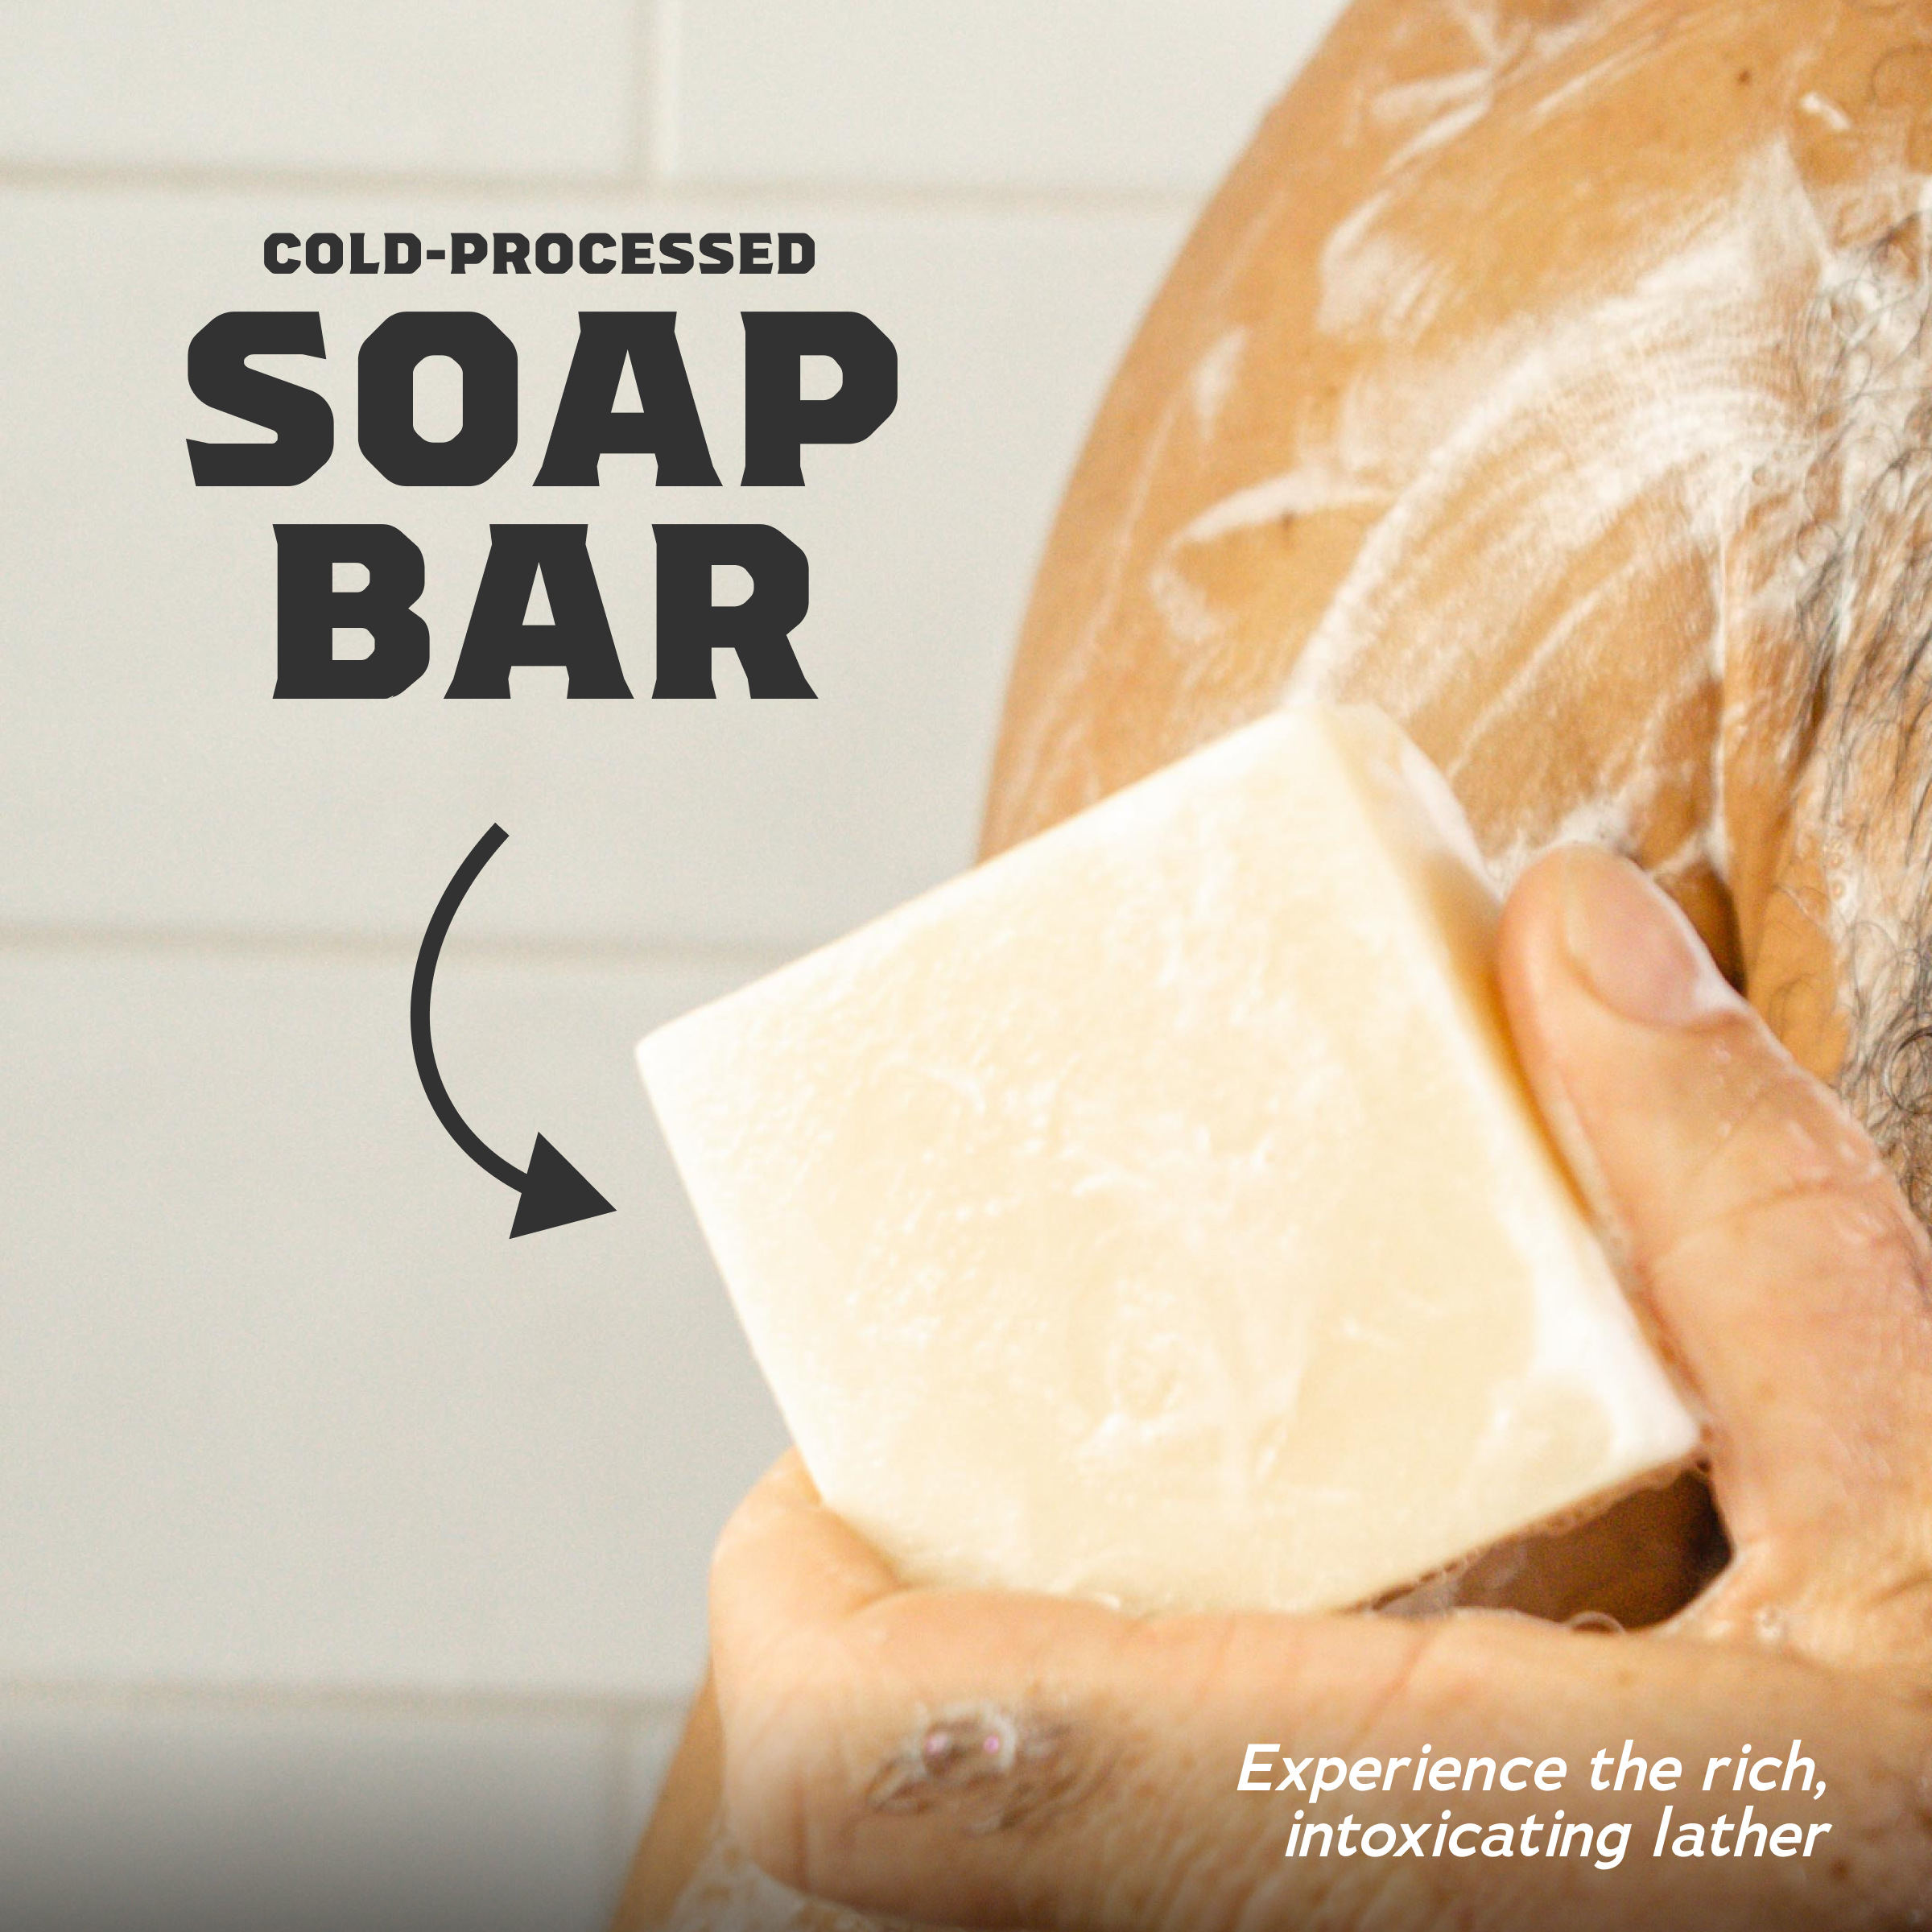 Essential 10-Pack Soap - Dr. Squatch